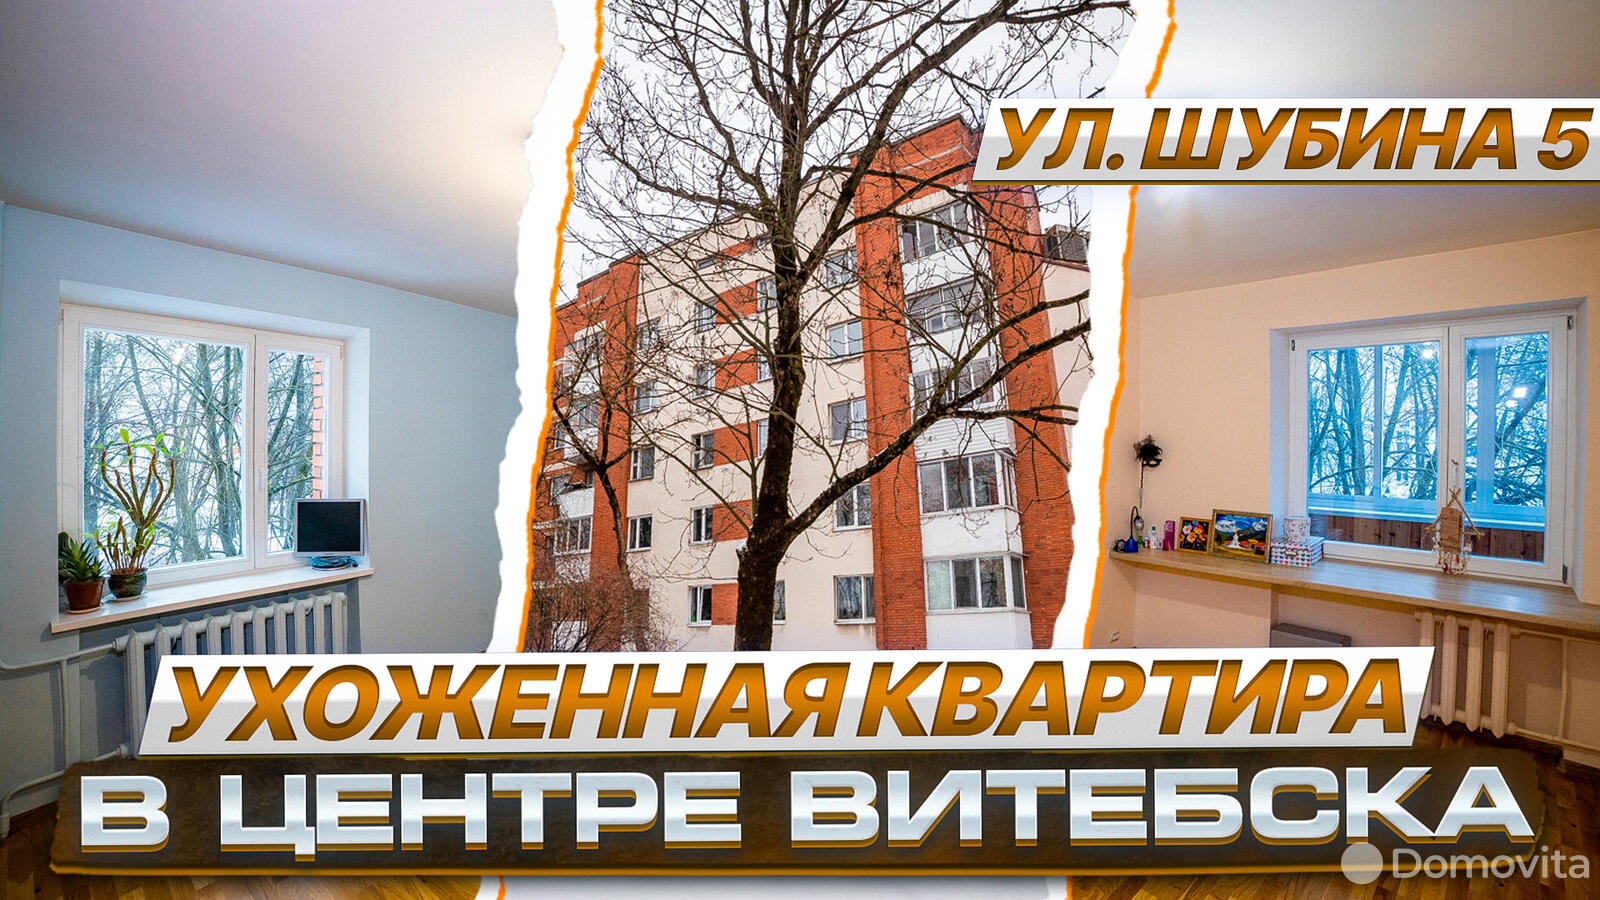 продажа квартиры, Витебск, ул. Шубина, д. 5